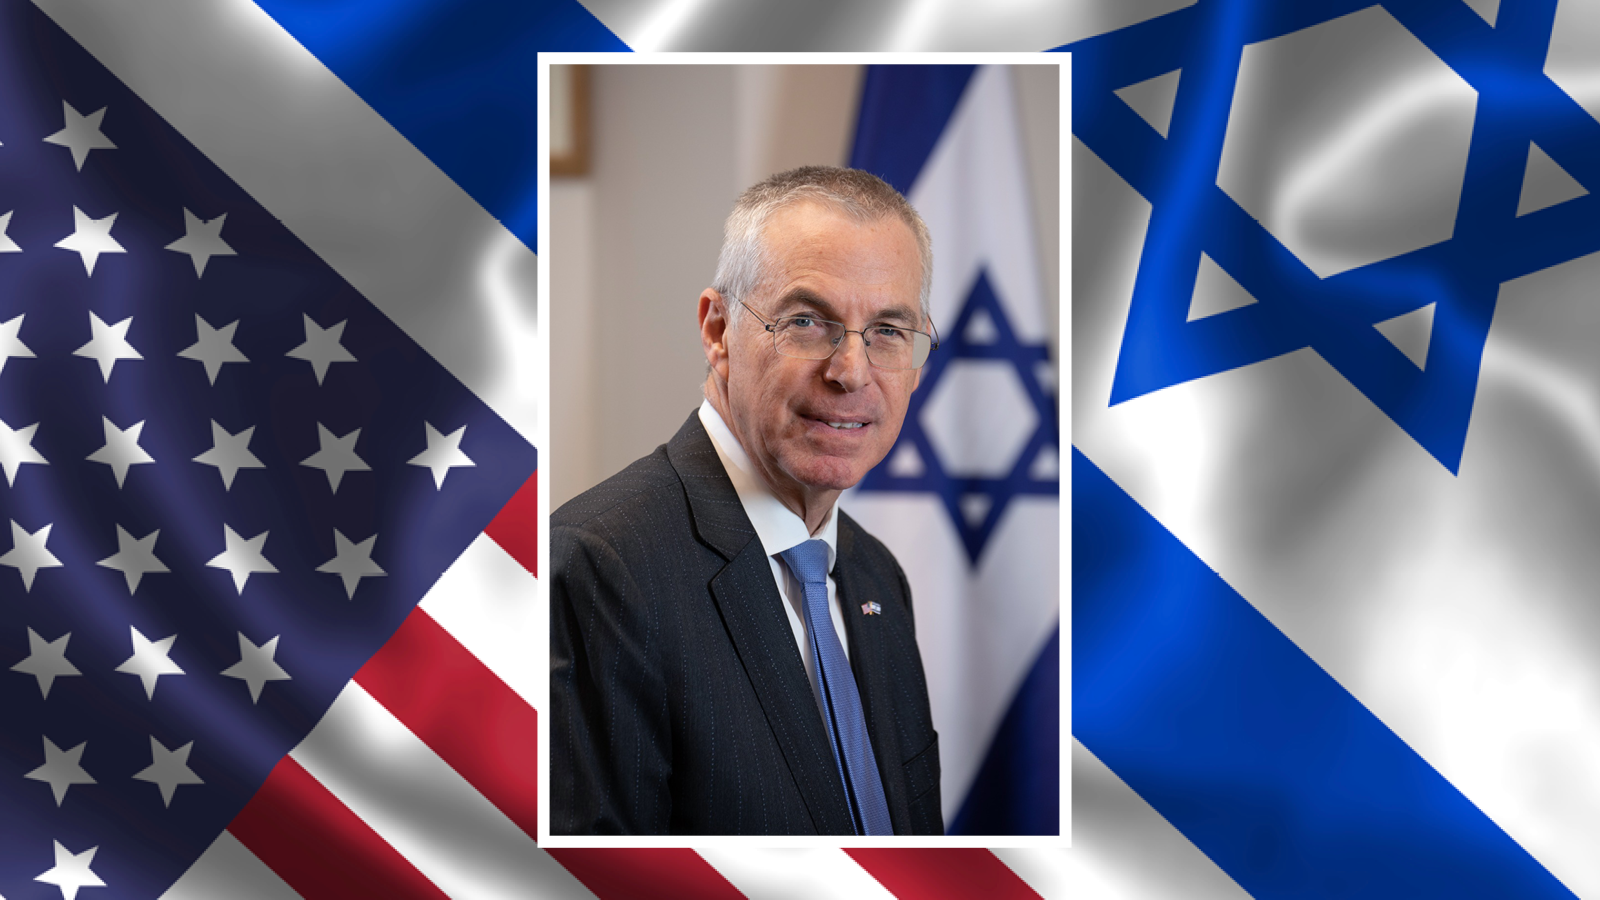 Ambassador Michael Herzog's headshot overtop the US and Israel flag.